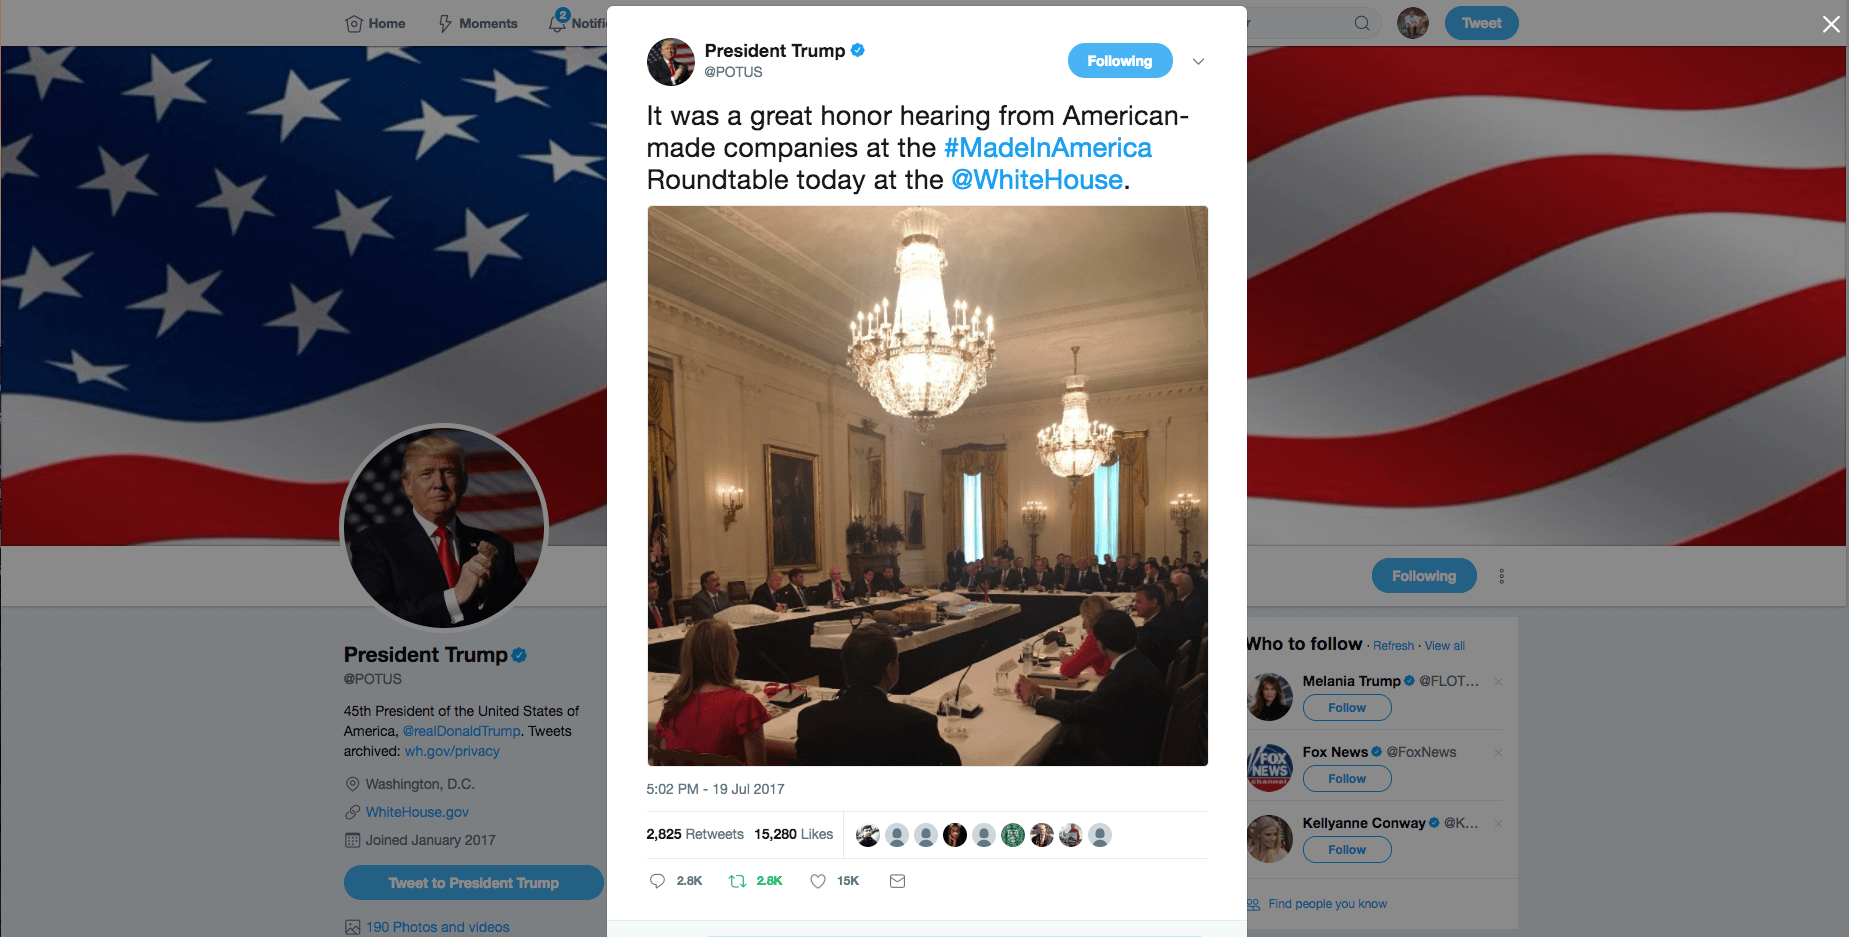 President Trump Tweet - Made in America Roundtable - Margarita Mendoza and Kurt Uhlir 1b